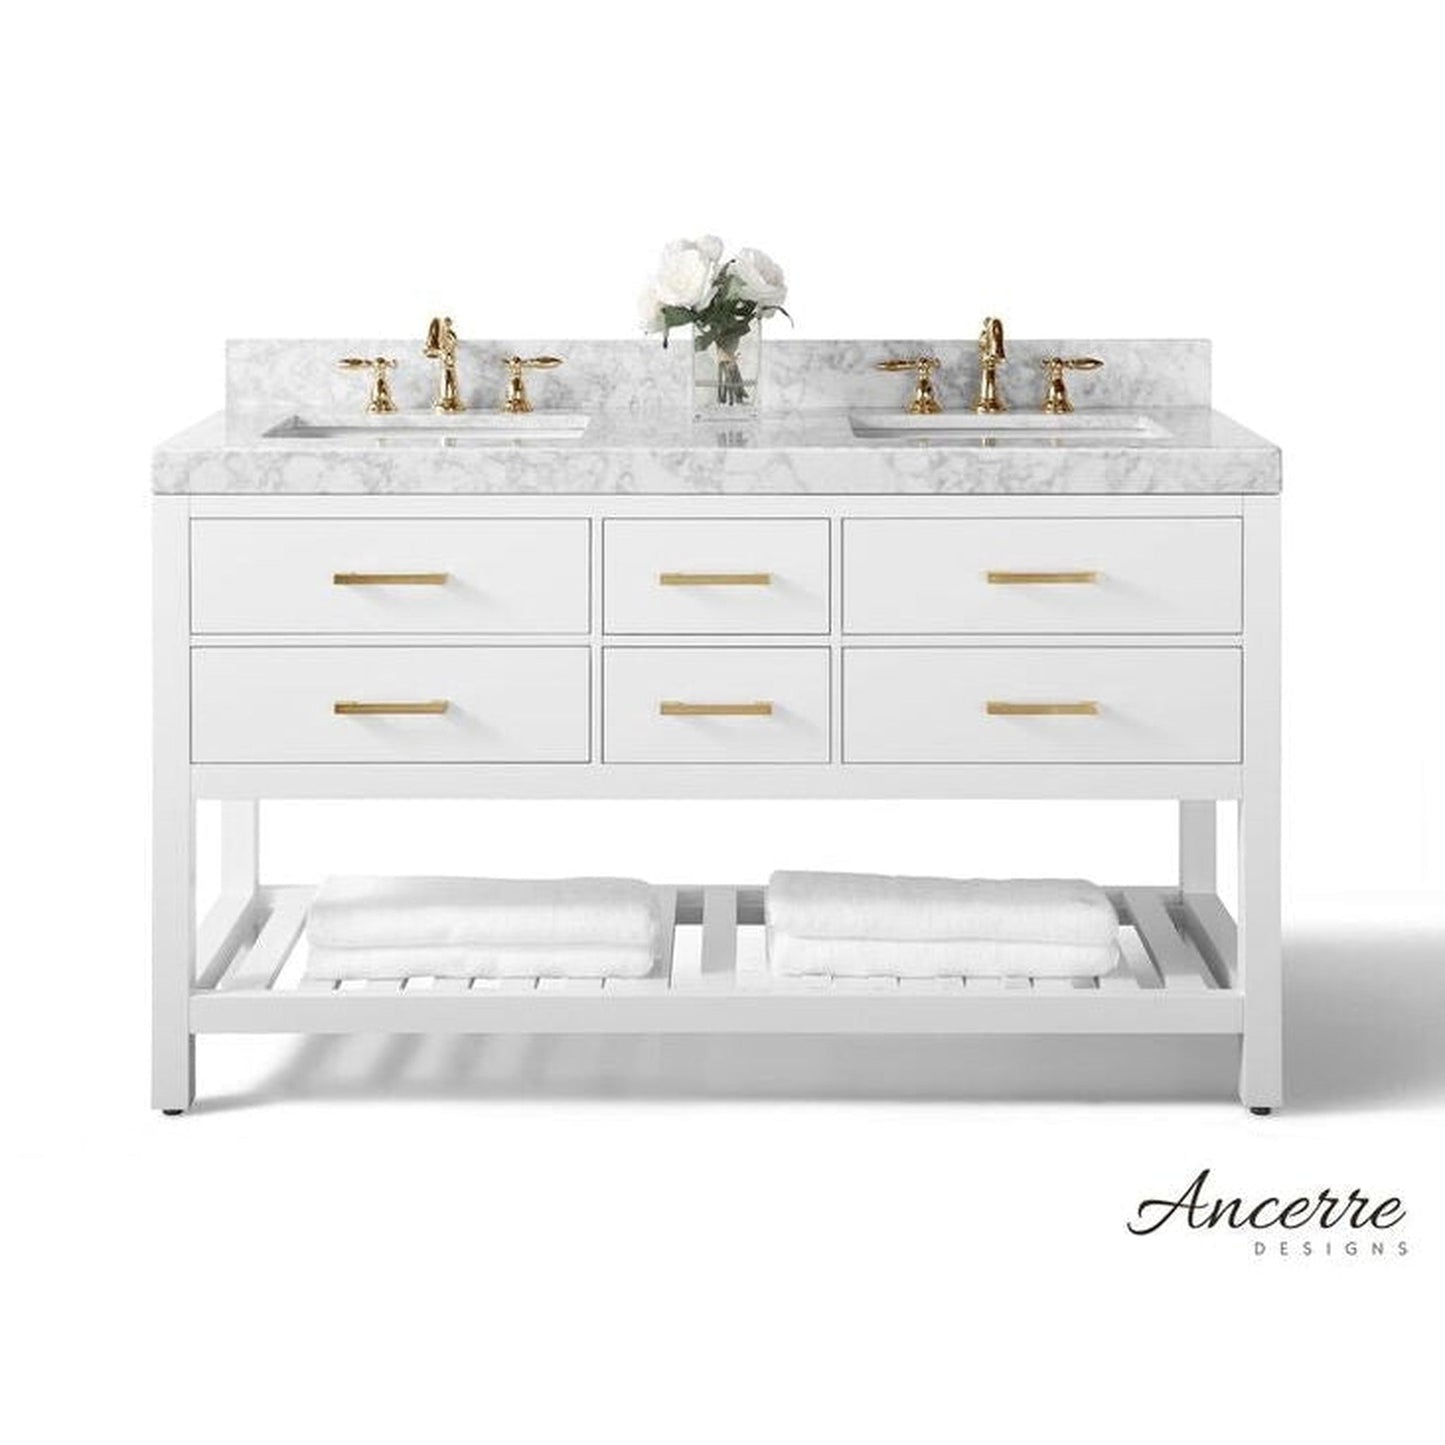 Ancerre Designs Elizabeth 60" White 4-Drawer 1-Shelve Bathroom Vanity With Italian Carrara White Marble Vanity Top, Double Undermount Ceramic Sinks, 4" Solid Wood Backsplash and Satin Brushed Gold Hardware